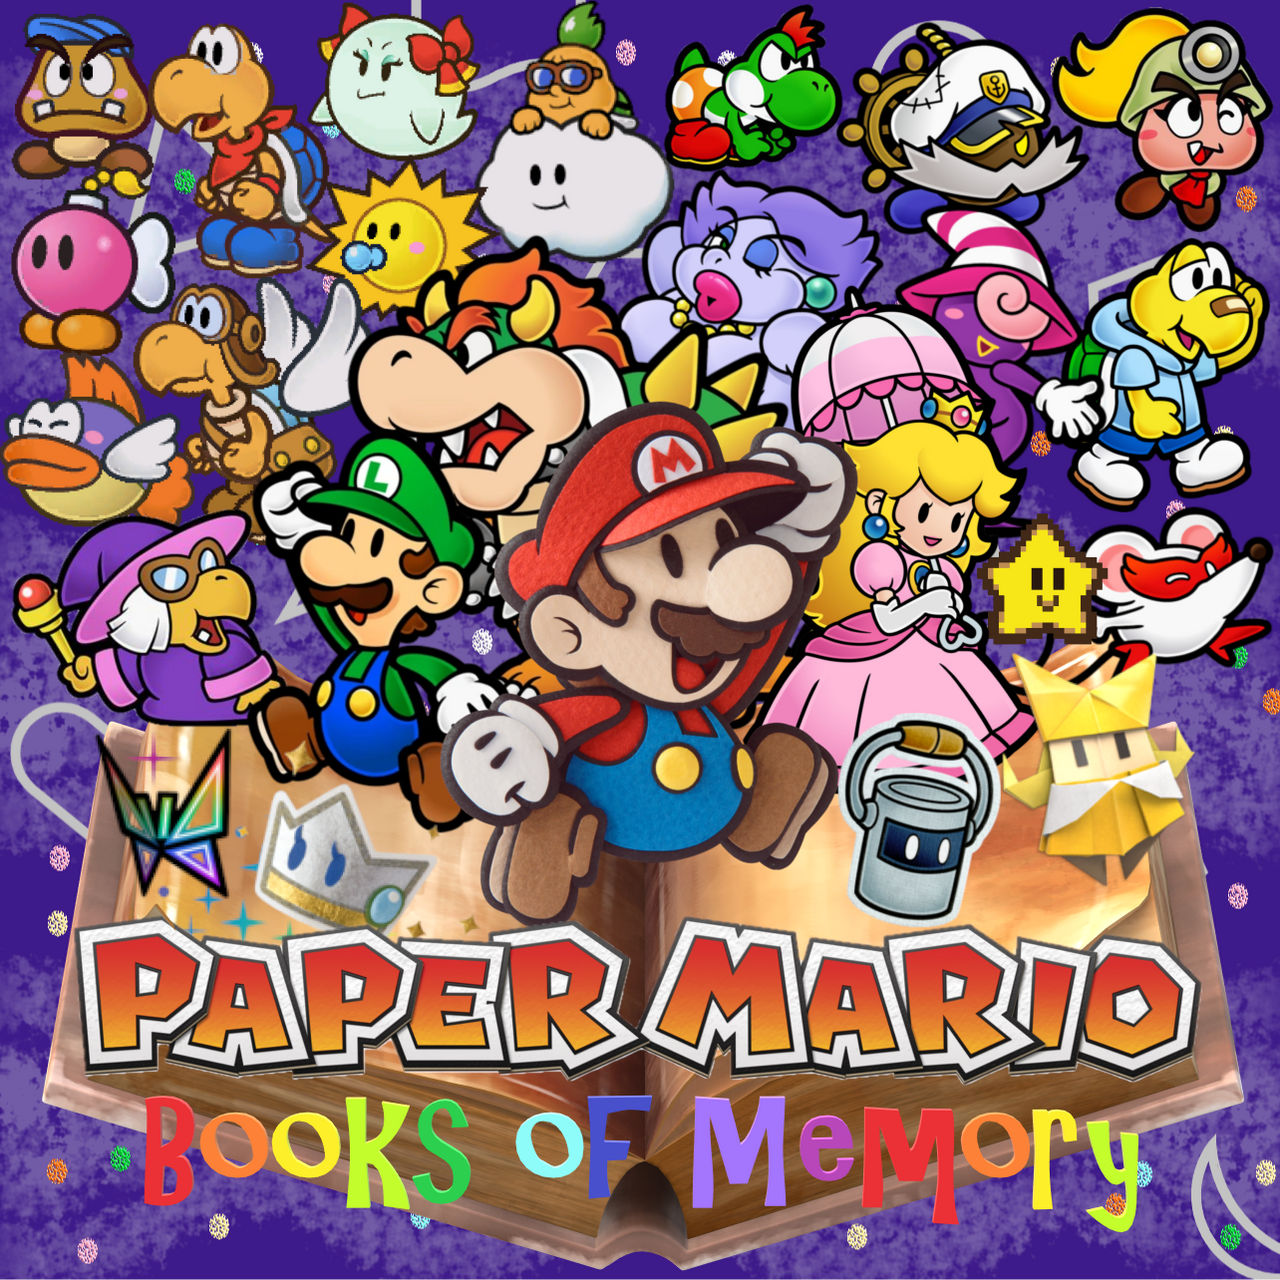 Paper Mario Books of Memory Reveal by KawaiiWonder on DeviantArt